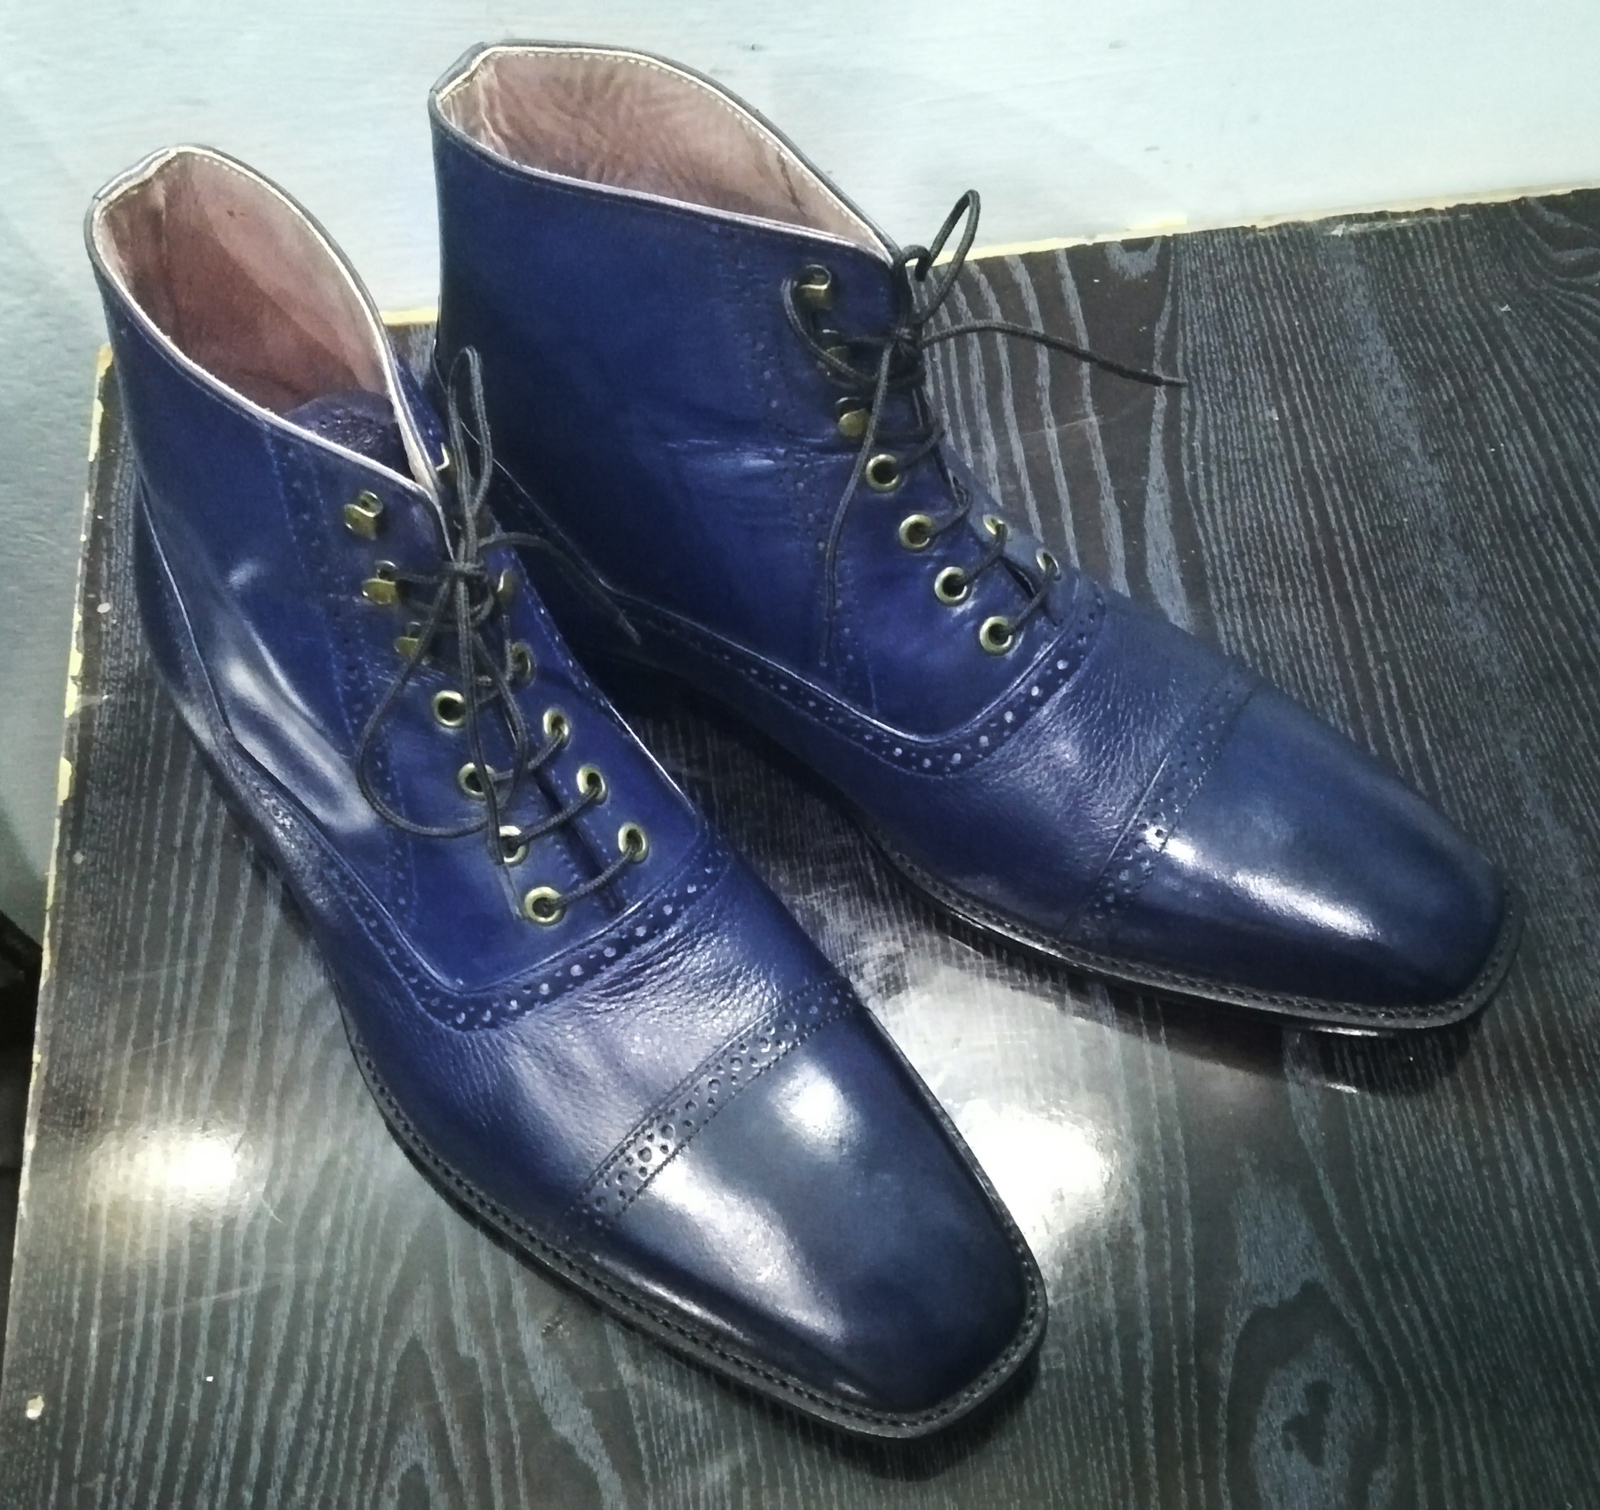 Handmade Men's Blue Cap Toe Leather Ankle Boots, Men Fashion Designer Boots